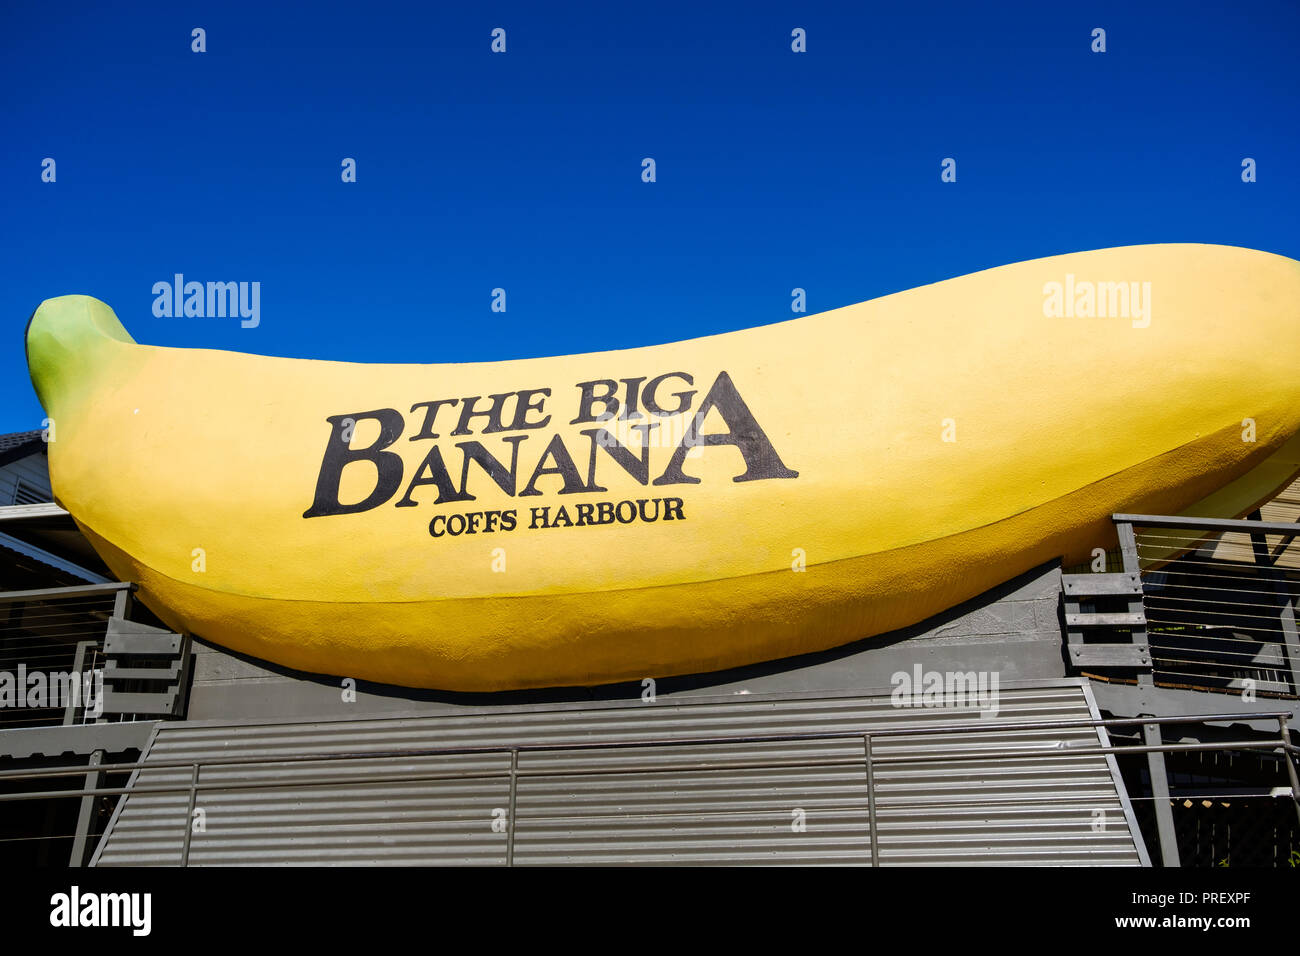 The Big Banana, Coffs Harbour, Australia Stock Photo